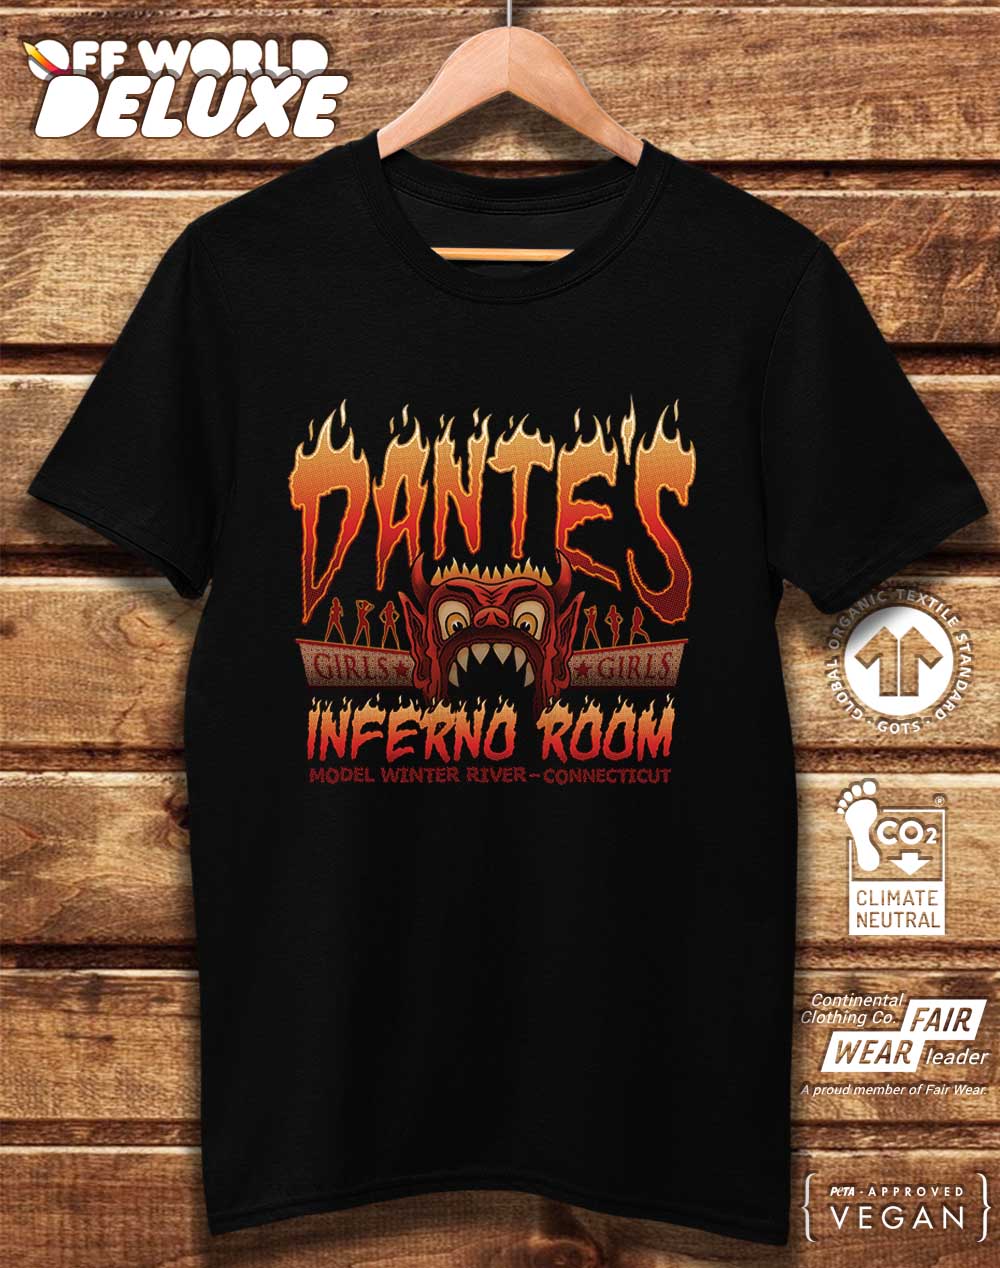 DELUXE Dante's Inferno Room Organic Cotton T-Shirt